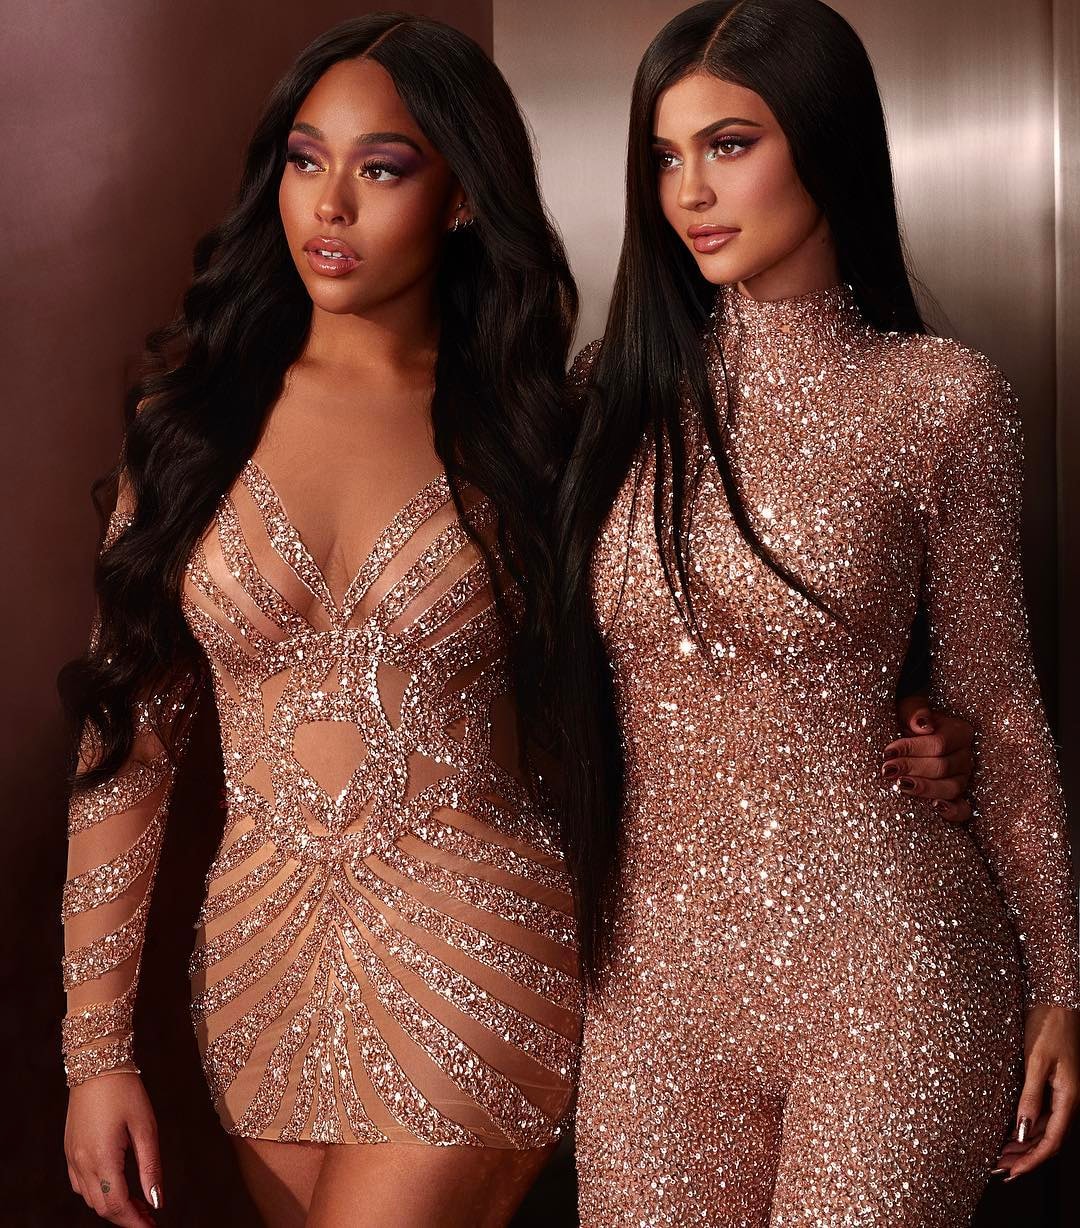 Kylie Jenner Jordyn Woods Makeup Collaboration Reveal Cosmetics Sparkly Diamond Bodysuit Campaign September 21